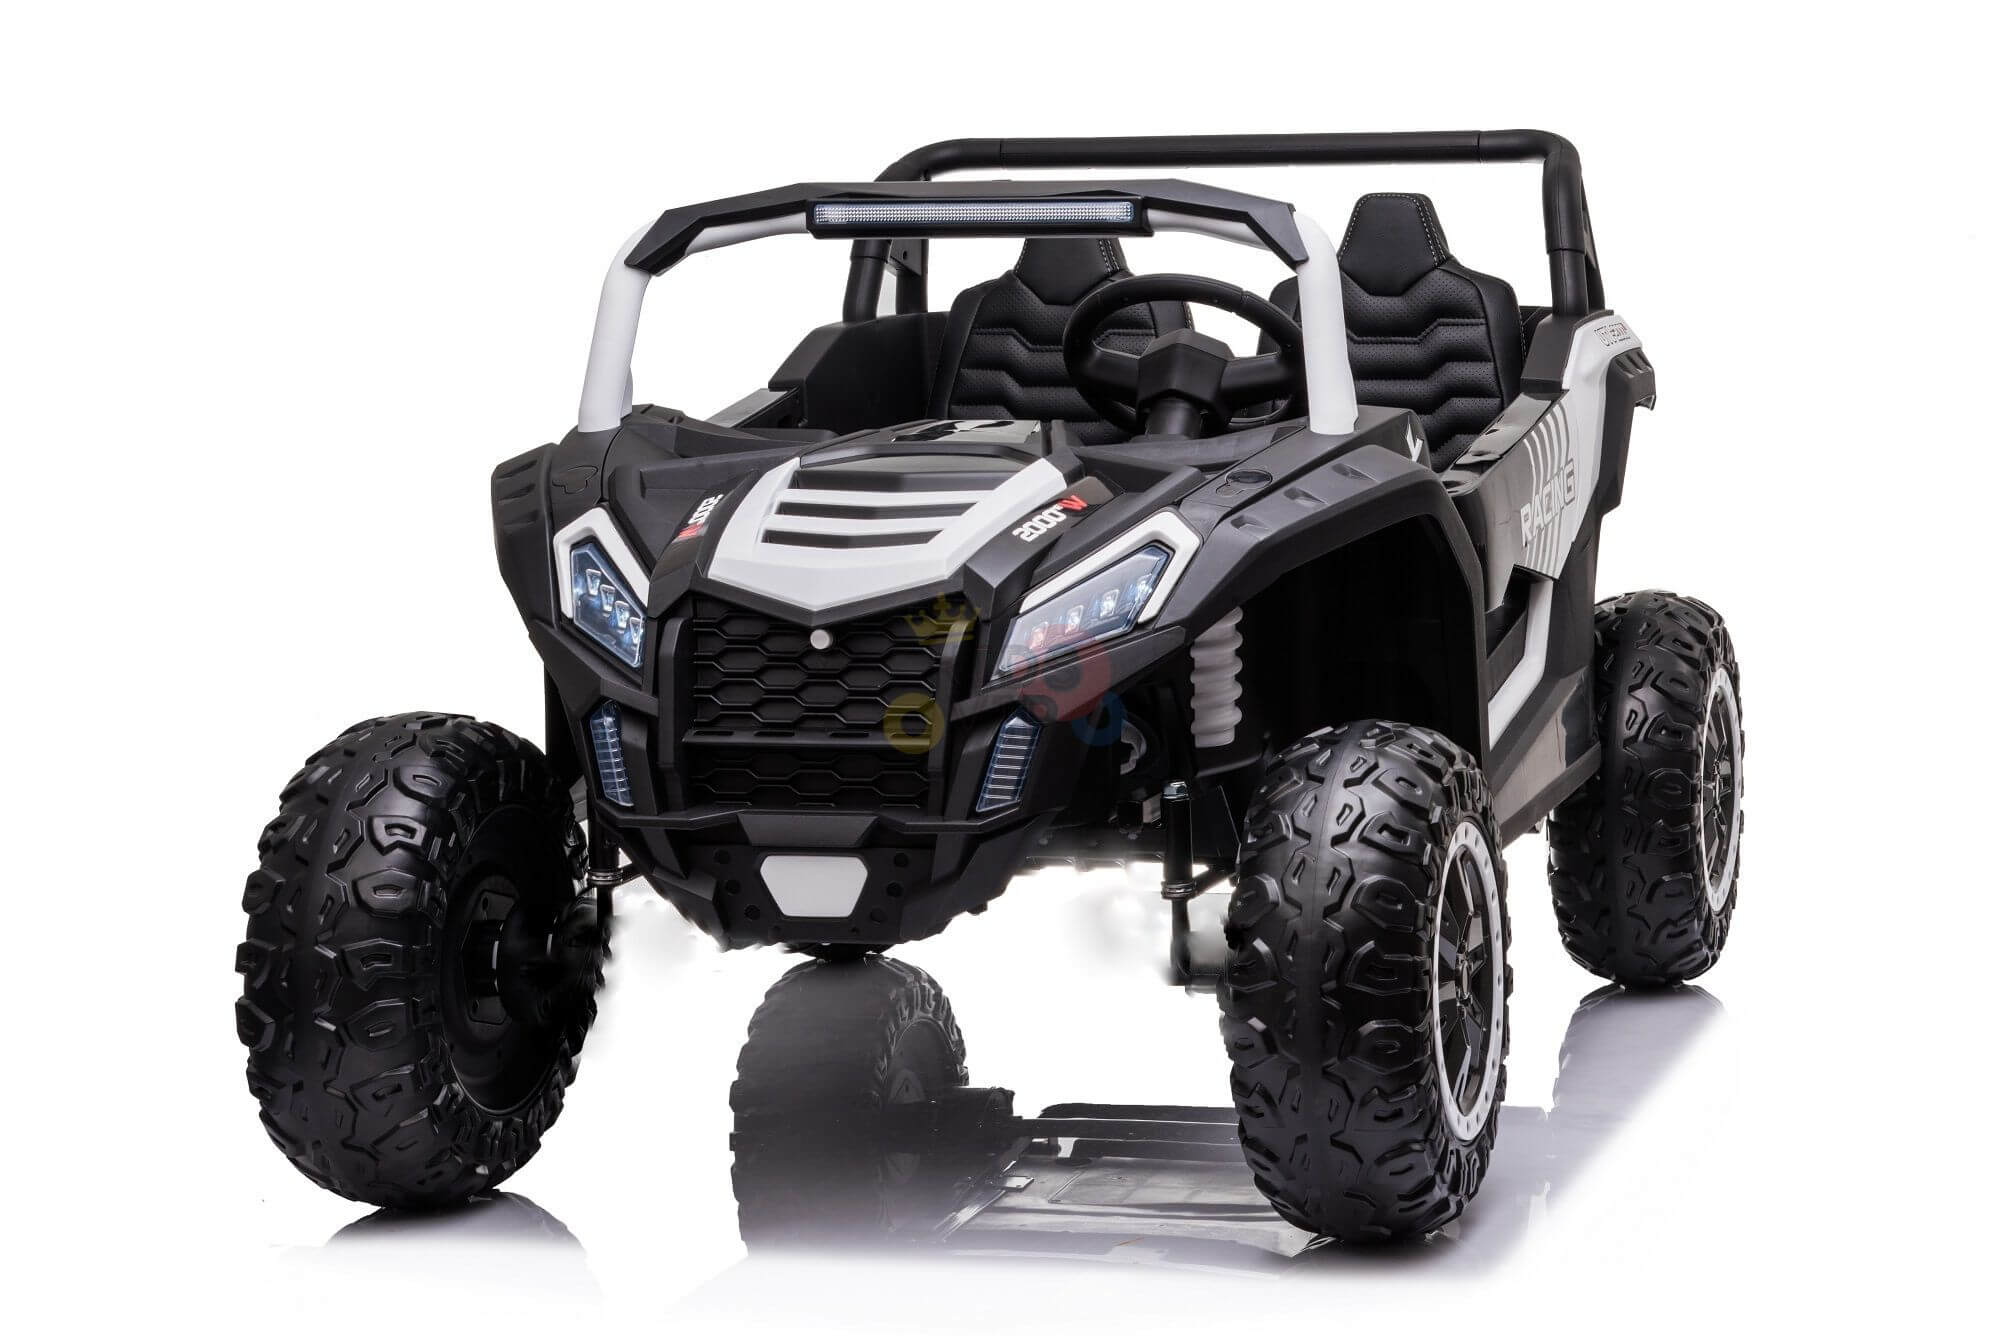 ZY Toys ATV All-Terrain Vehicle in Black [ZY-8033NA]